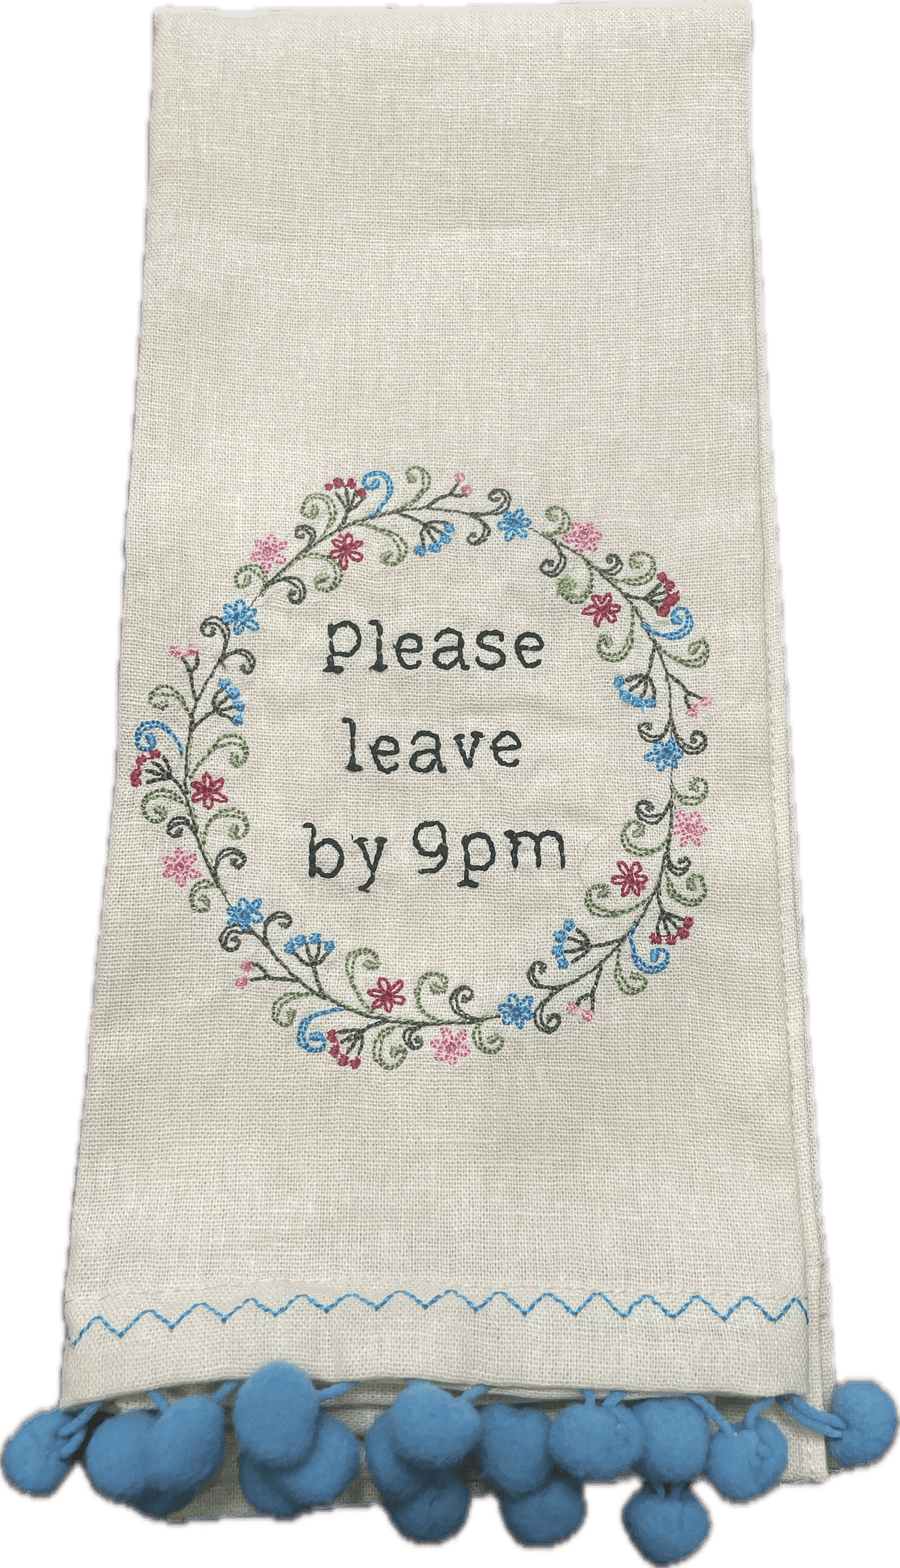 Needle Point Linen Tea Towels - Please Leave by 9pm